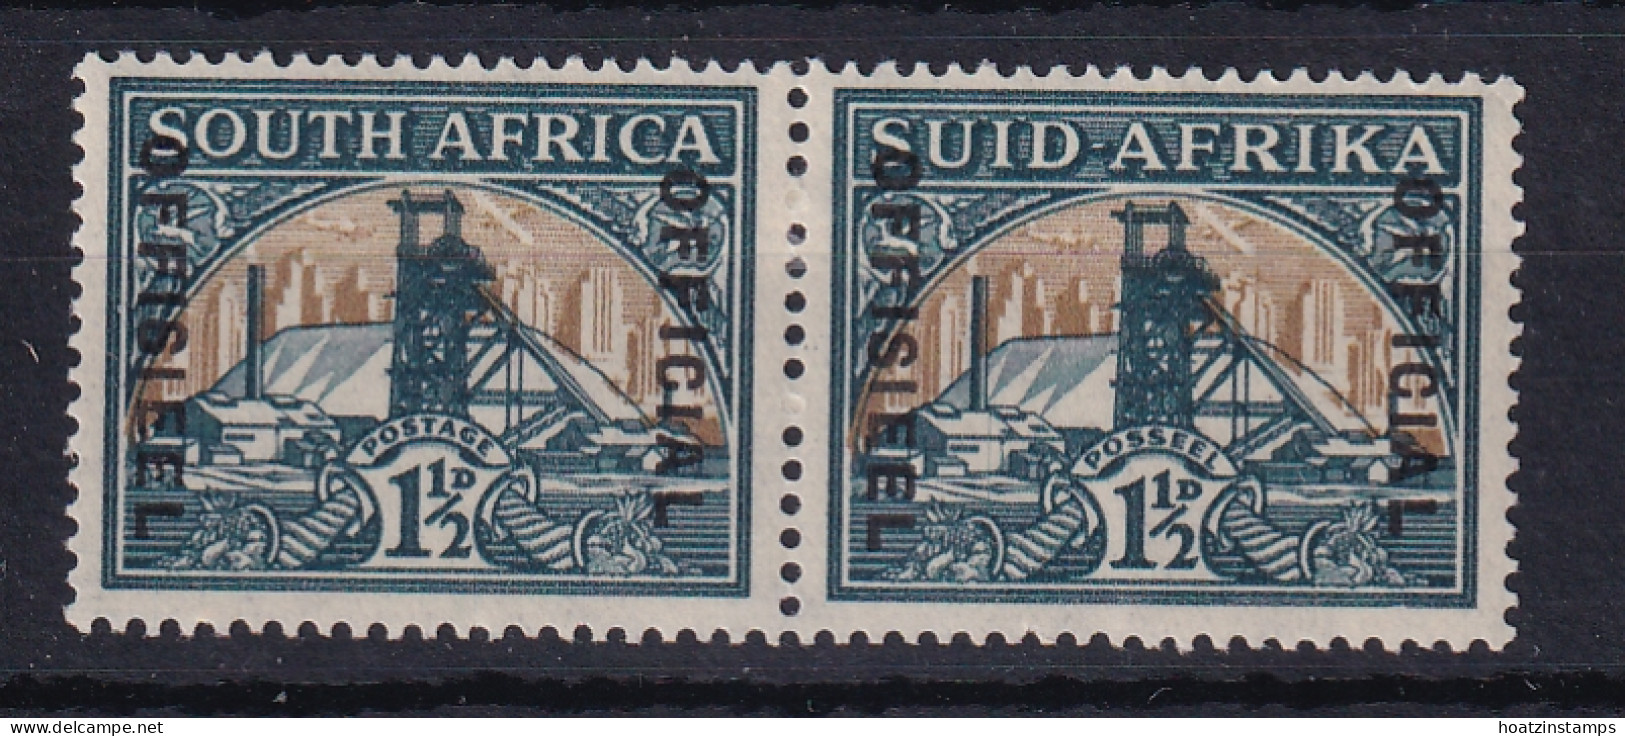 South Africa: 1935/49   Official - Goldmine   SG O22aw    1½d   Green & Bright Gold  [Wmk Upright]  MH Pair - Dienstzegels